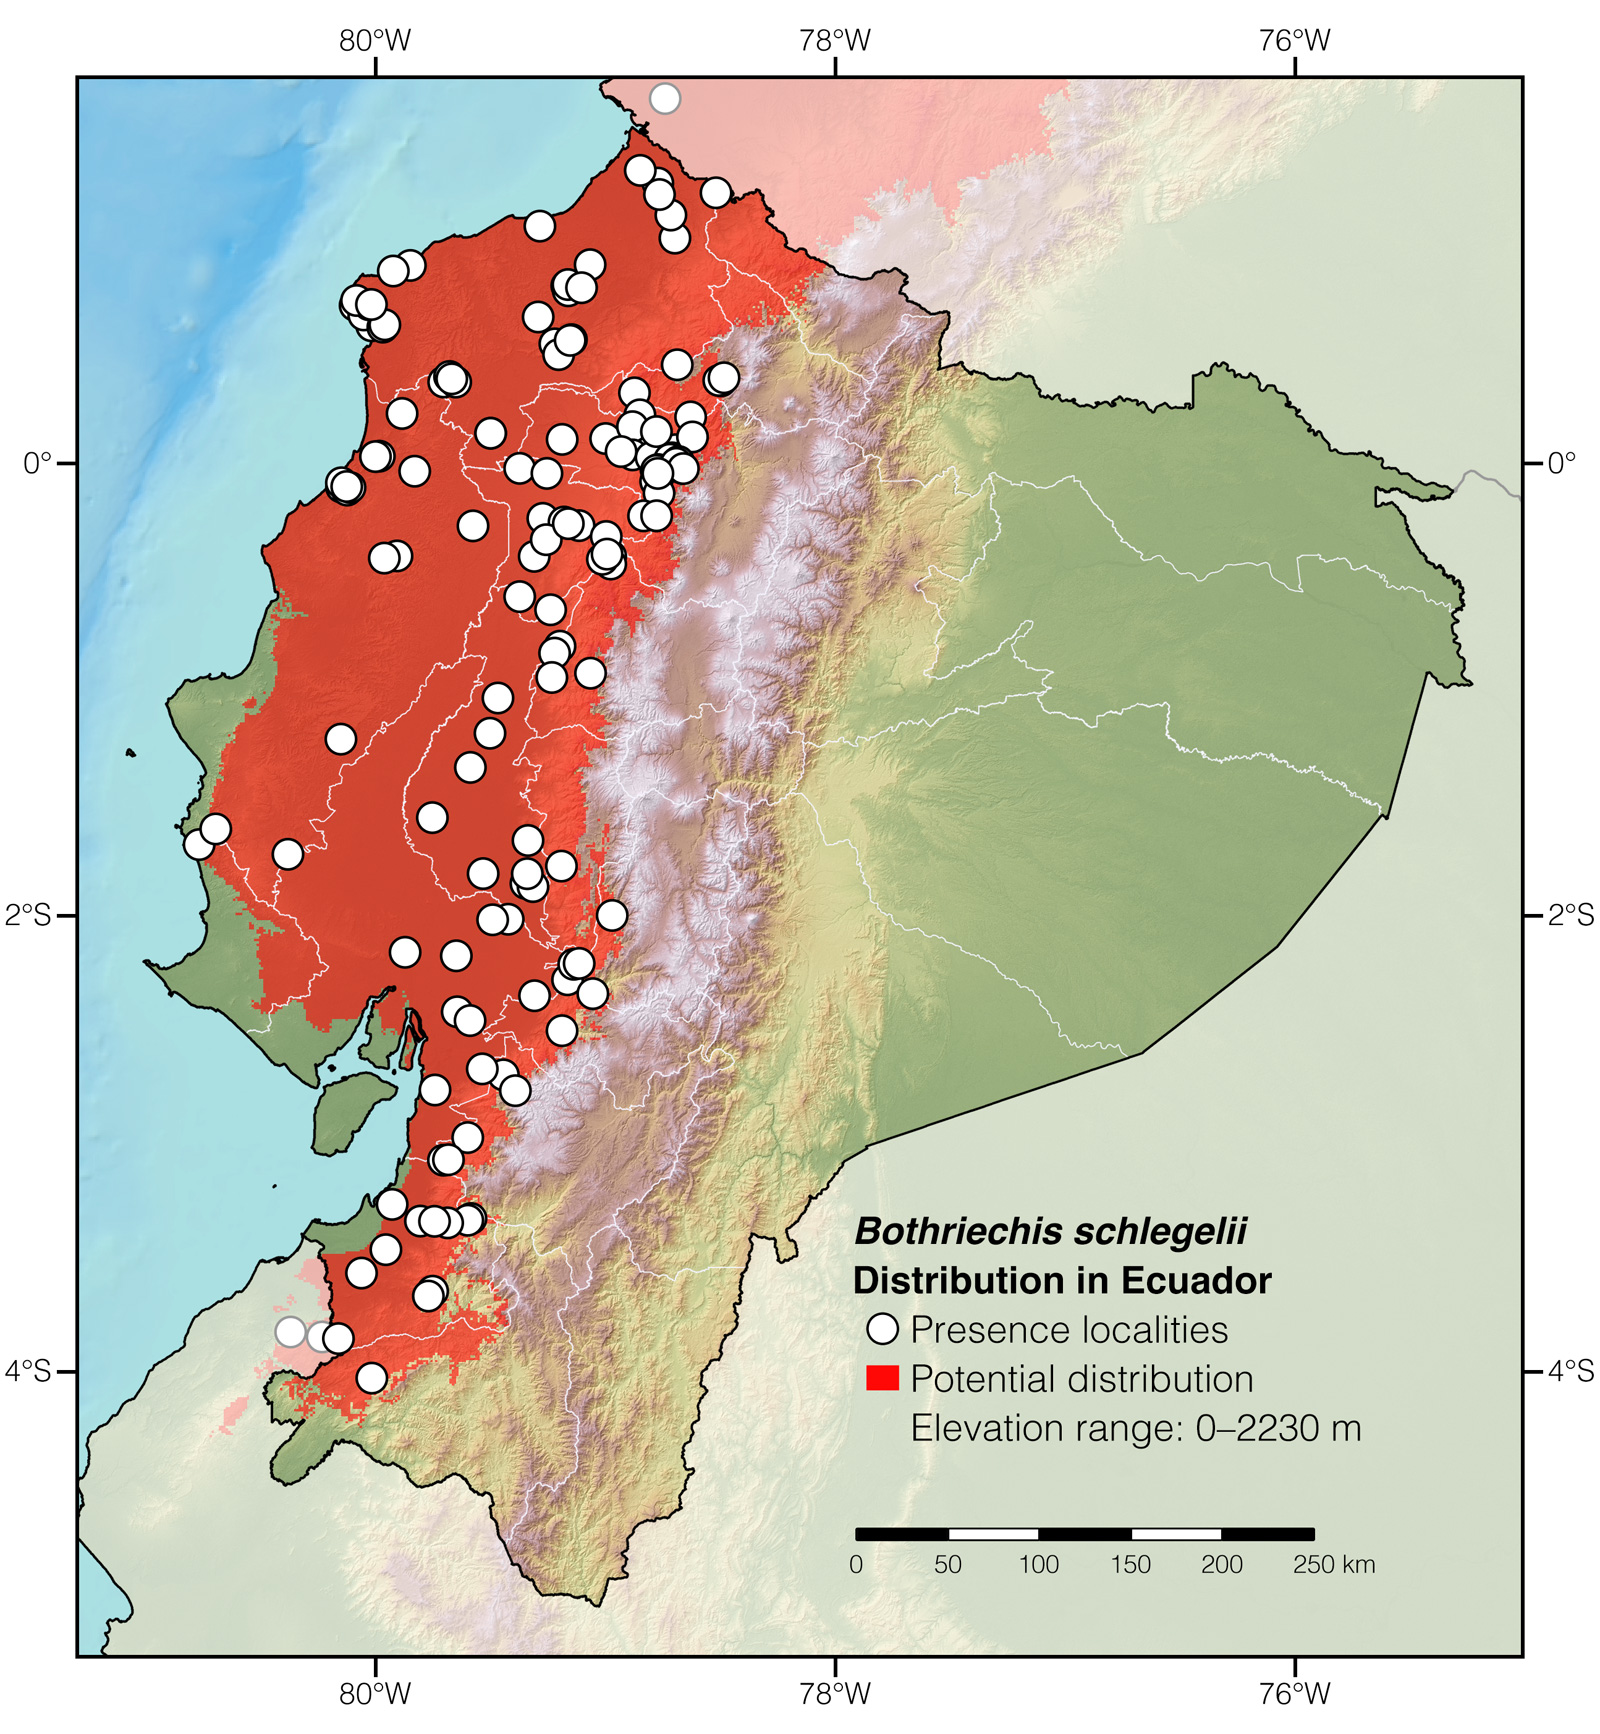 Distribution of Bothriechis schlegelii in Ecuador